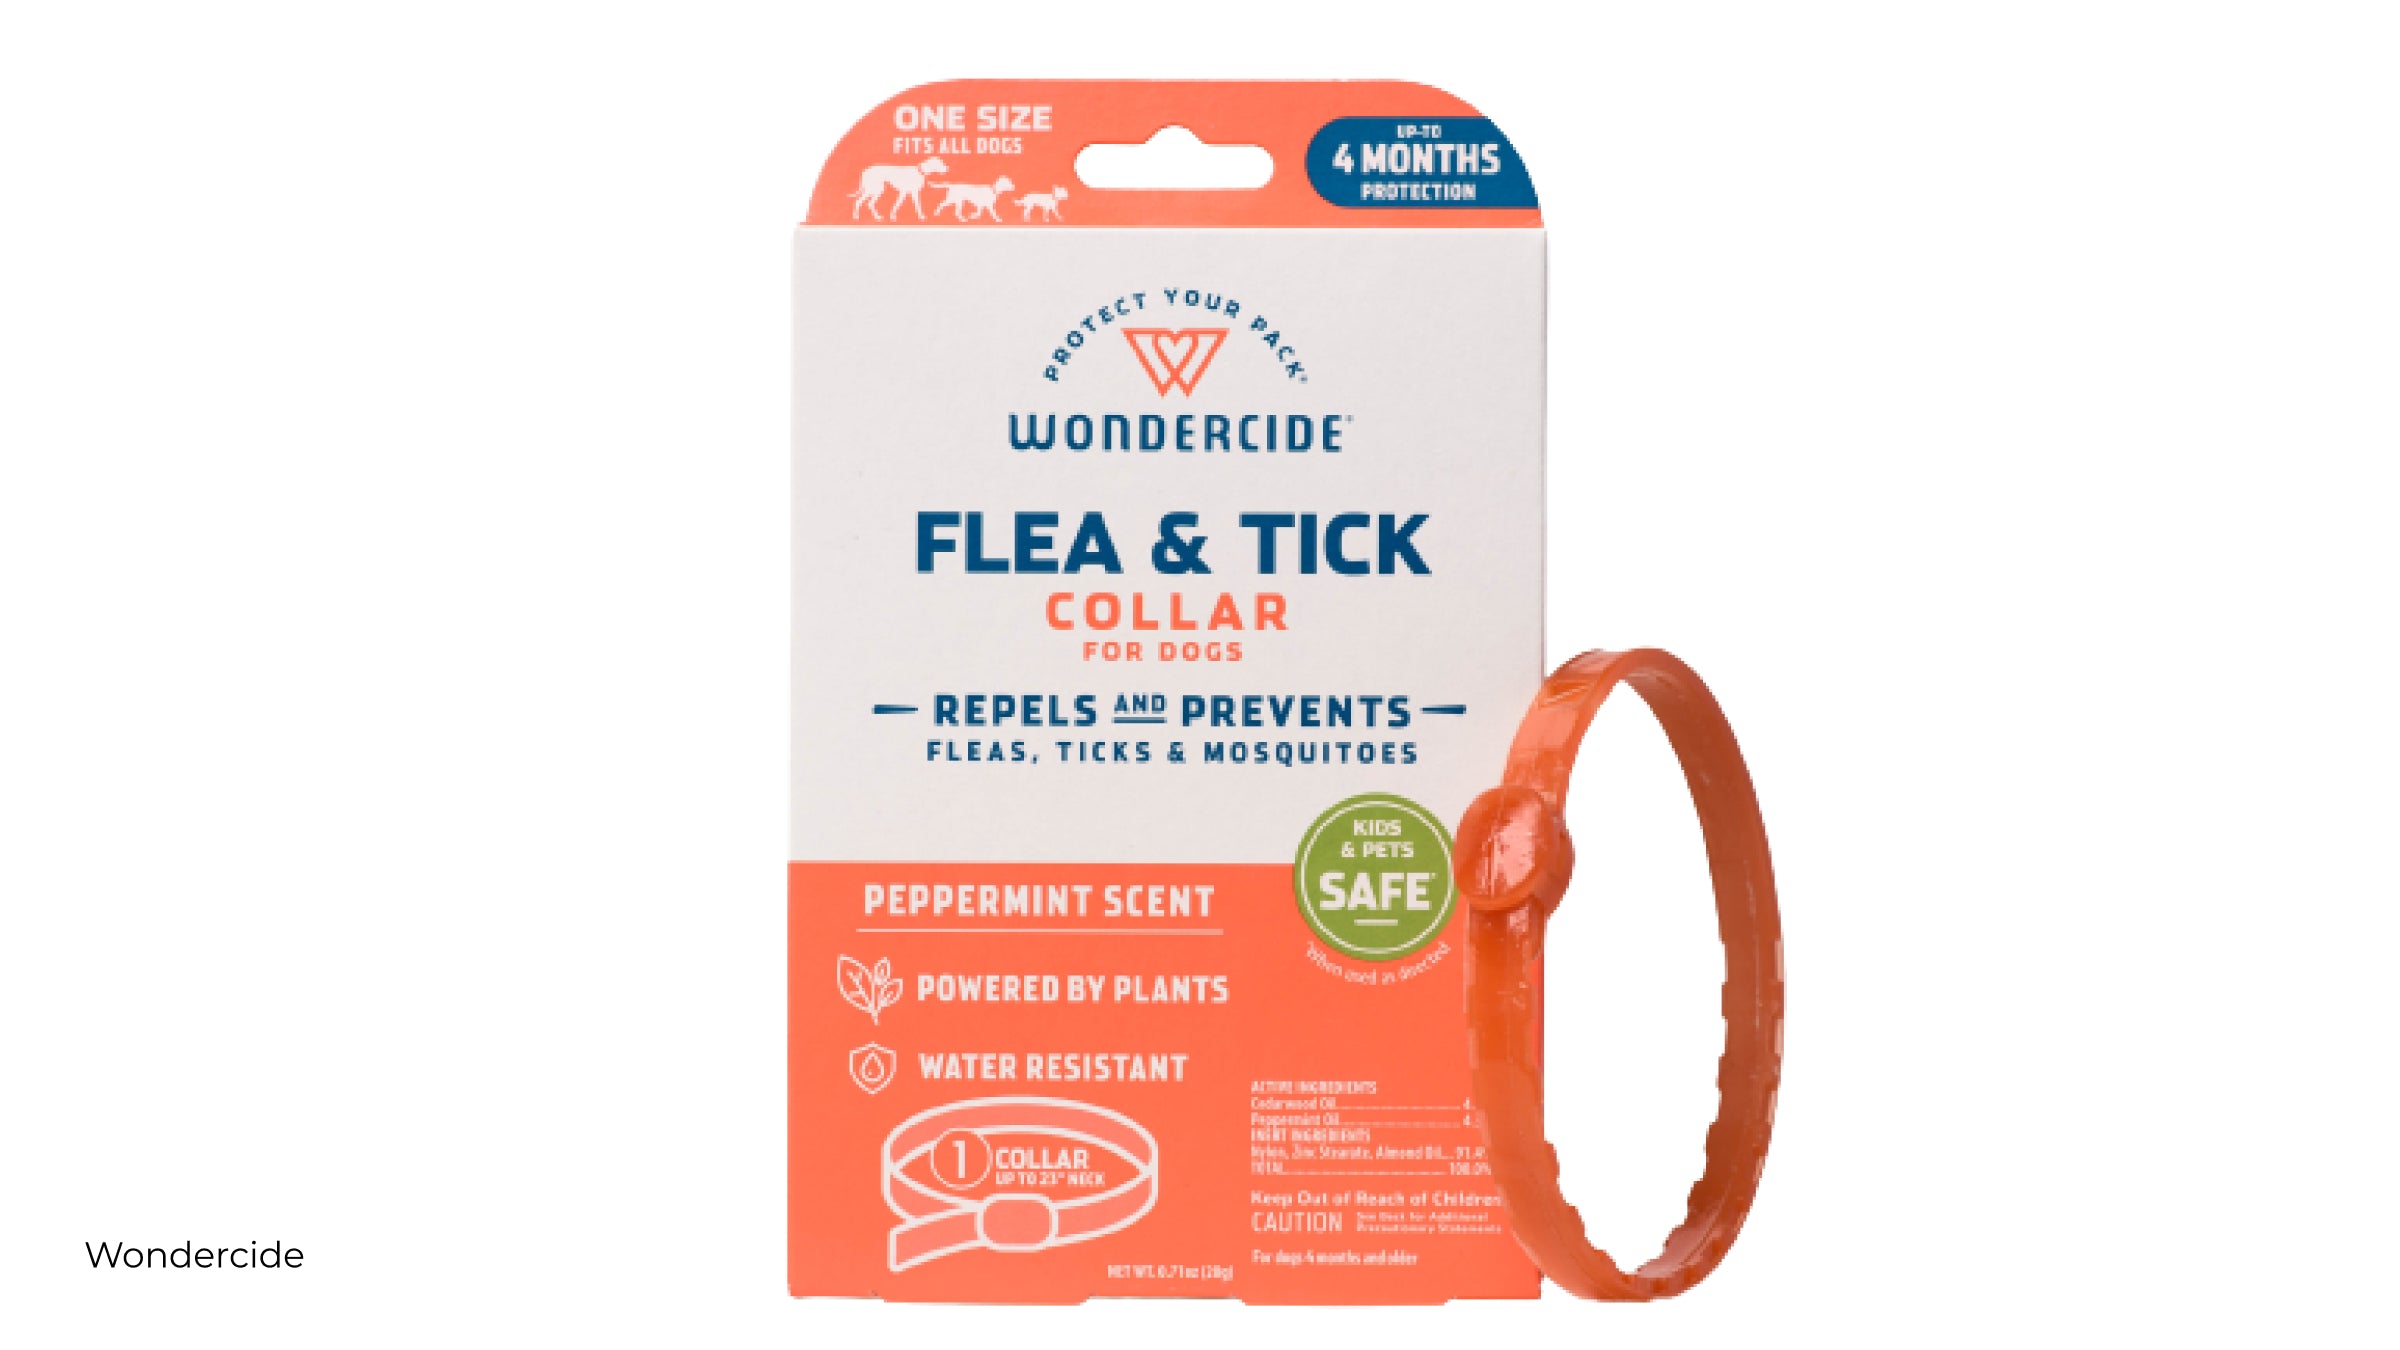 Wondercide Flea & Tick Collar for dogs